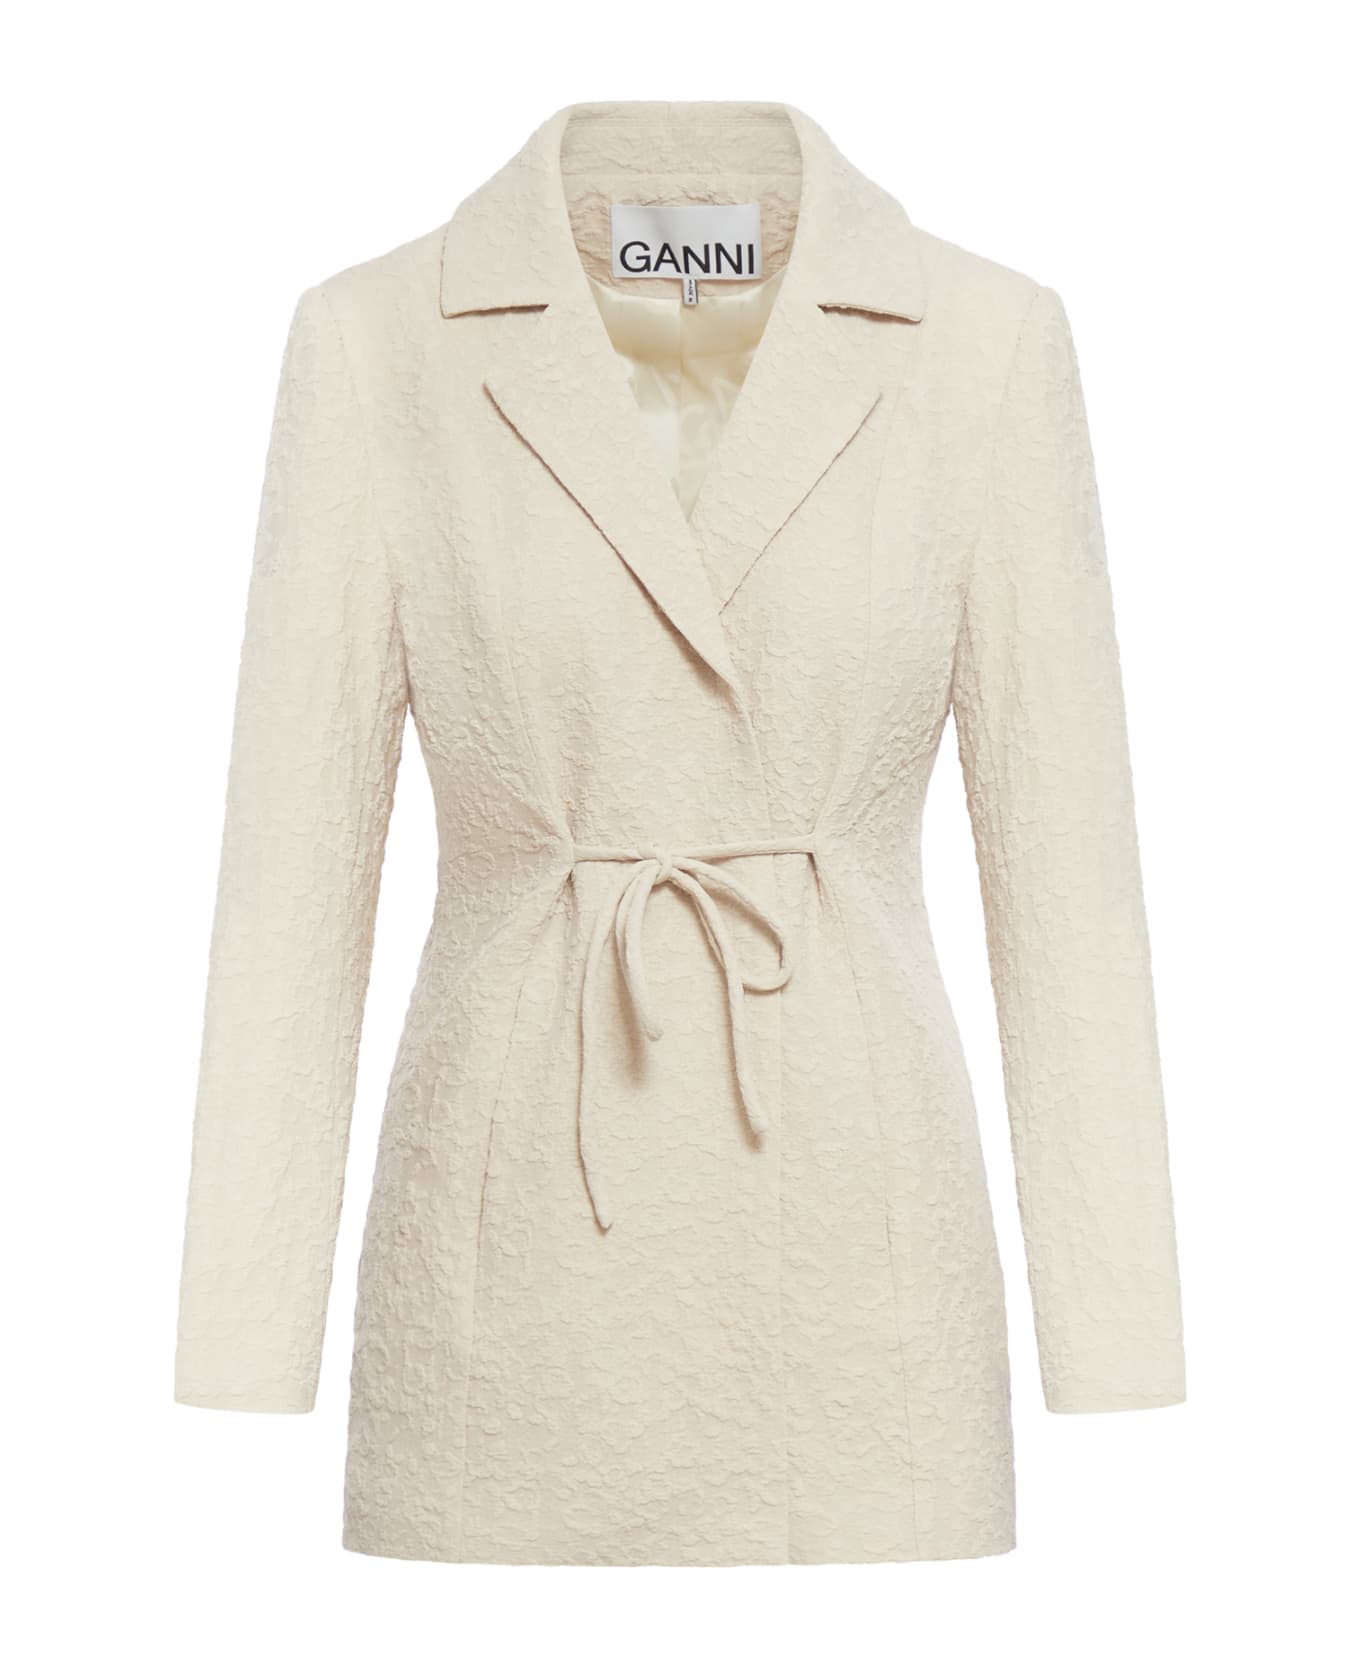 Ganni Textured Suiting Tiestring Blazer - Oyster Gray